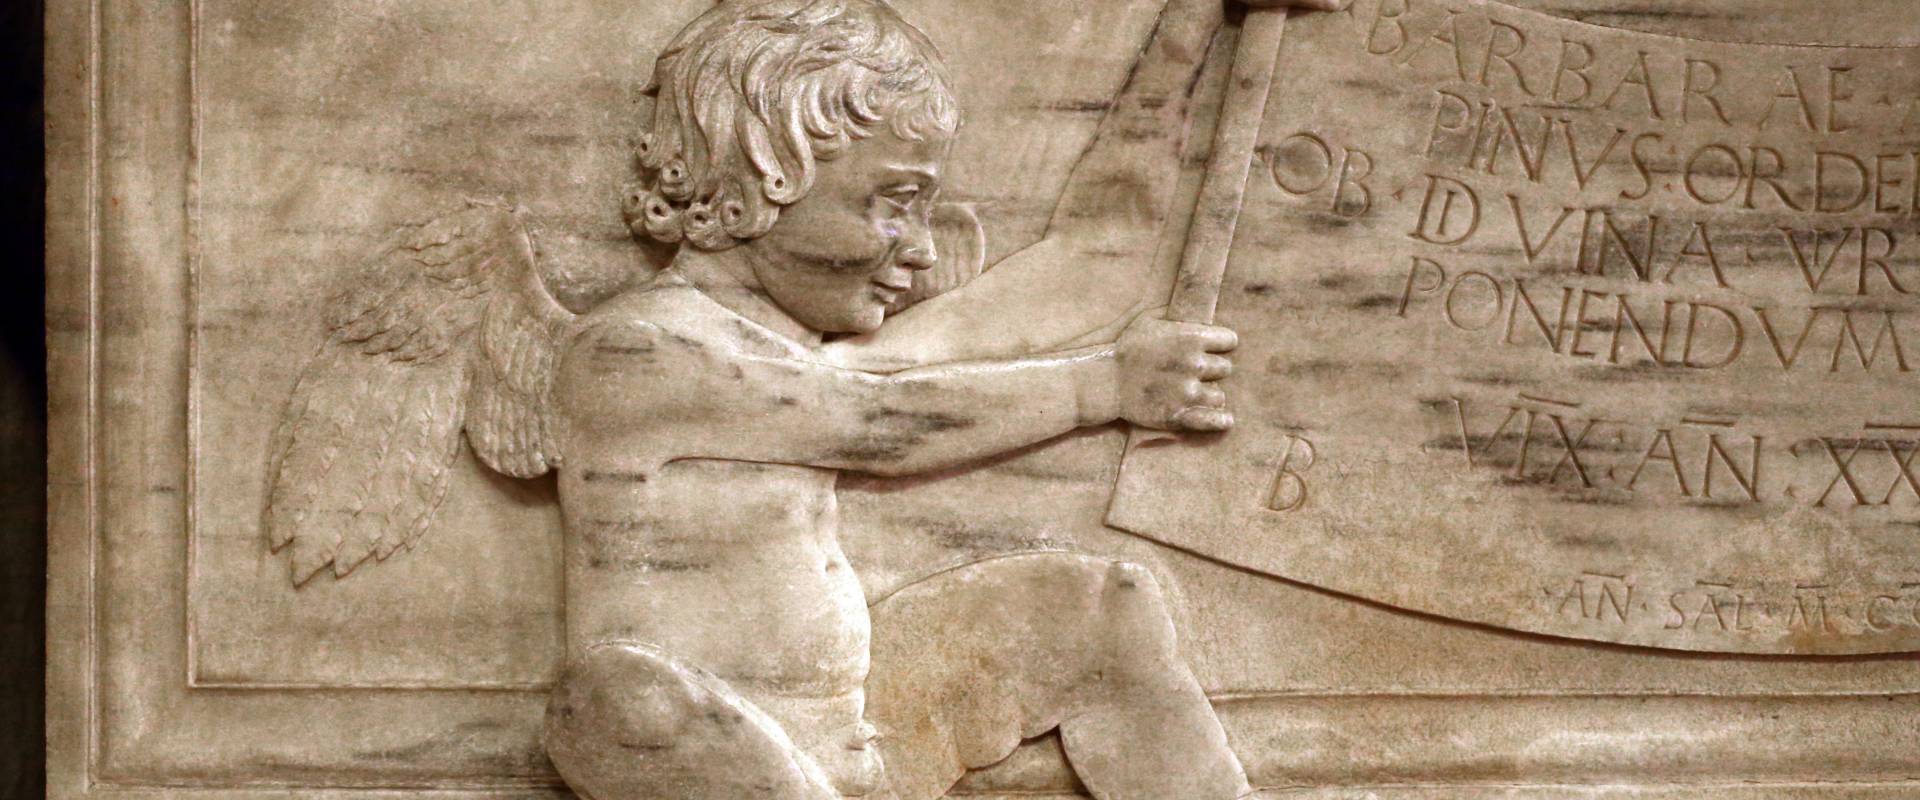 Francesco di simone ferrucci, monumento di barbara manfredi, 1466-68, 05 foto di Sailko